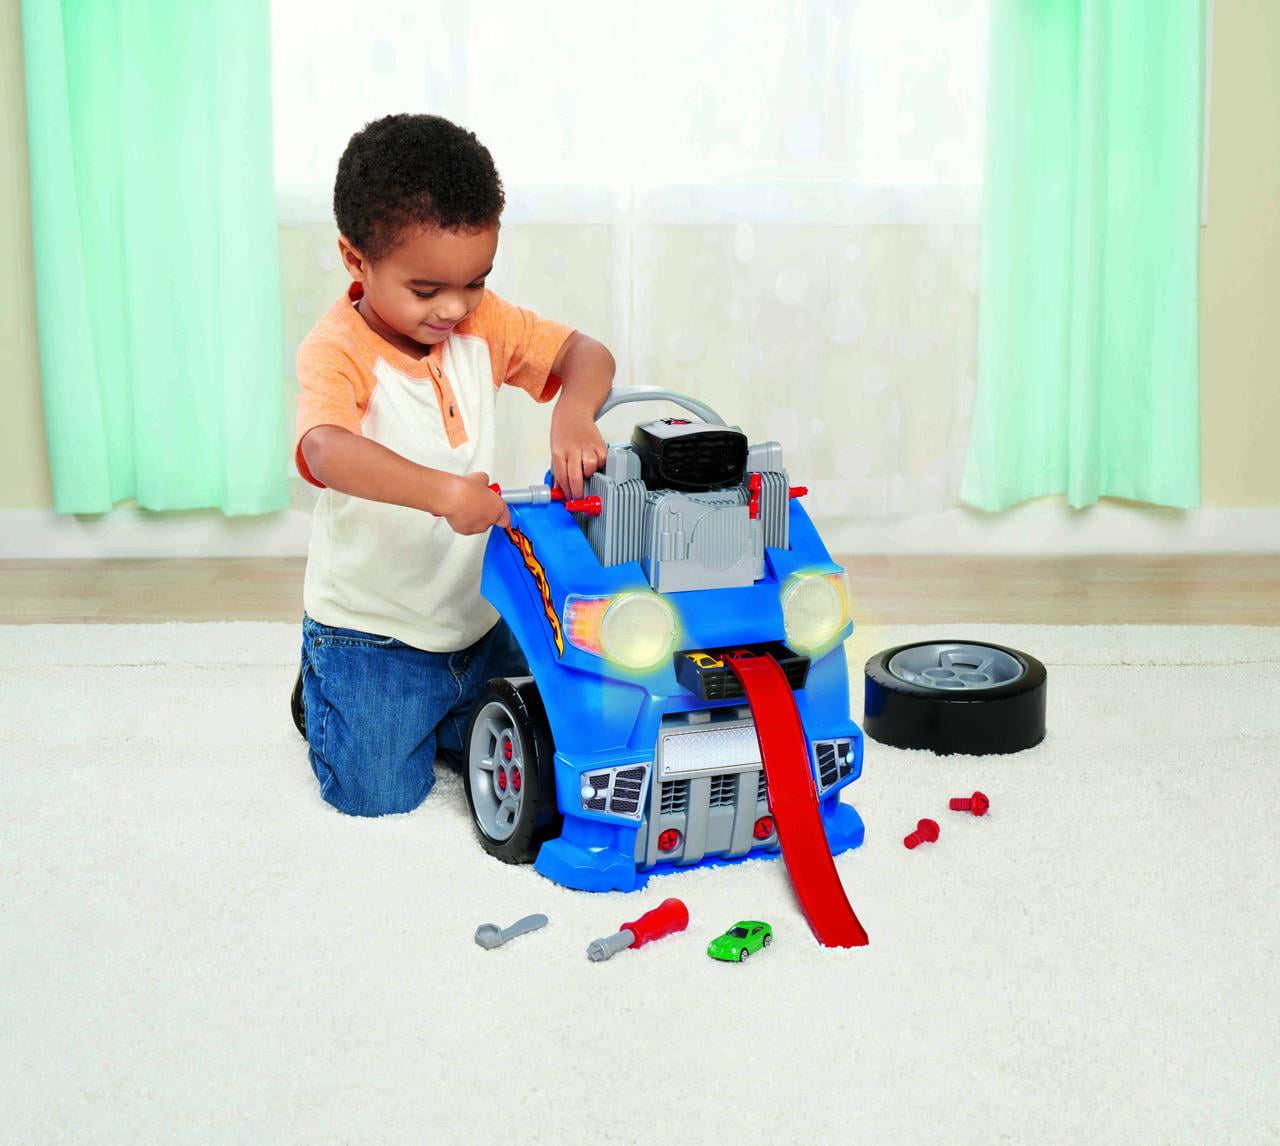 kids toy car engine